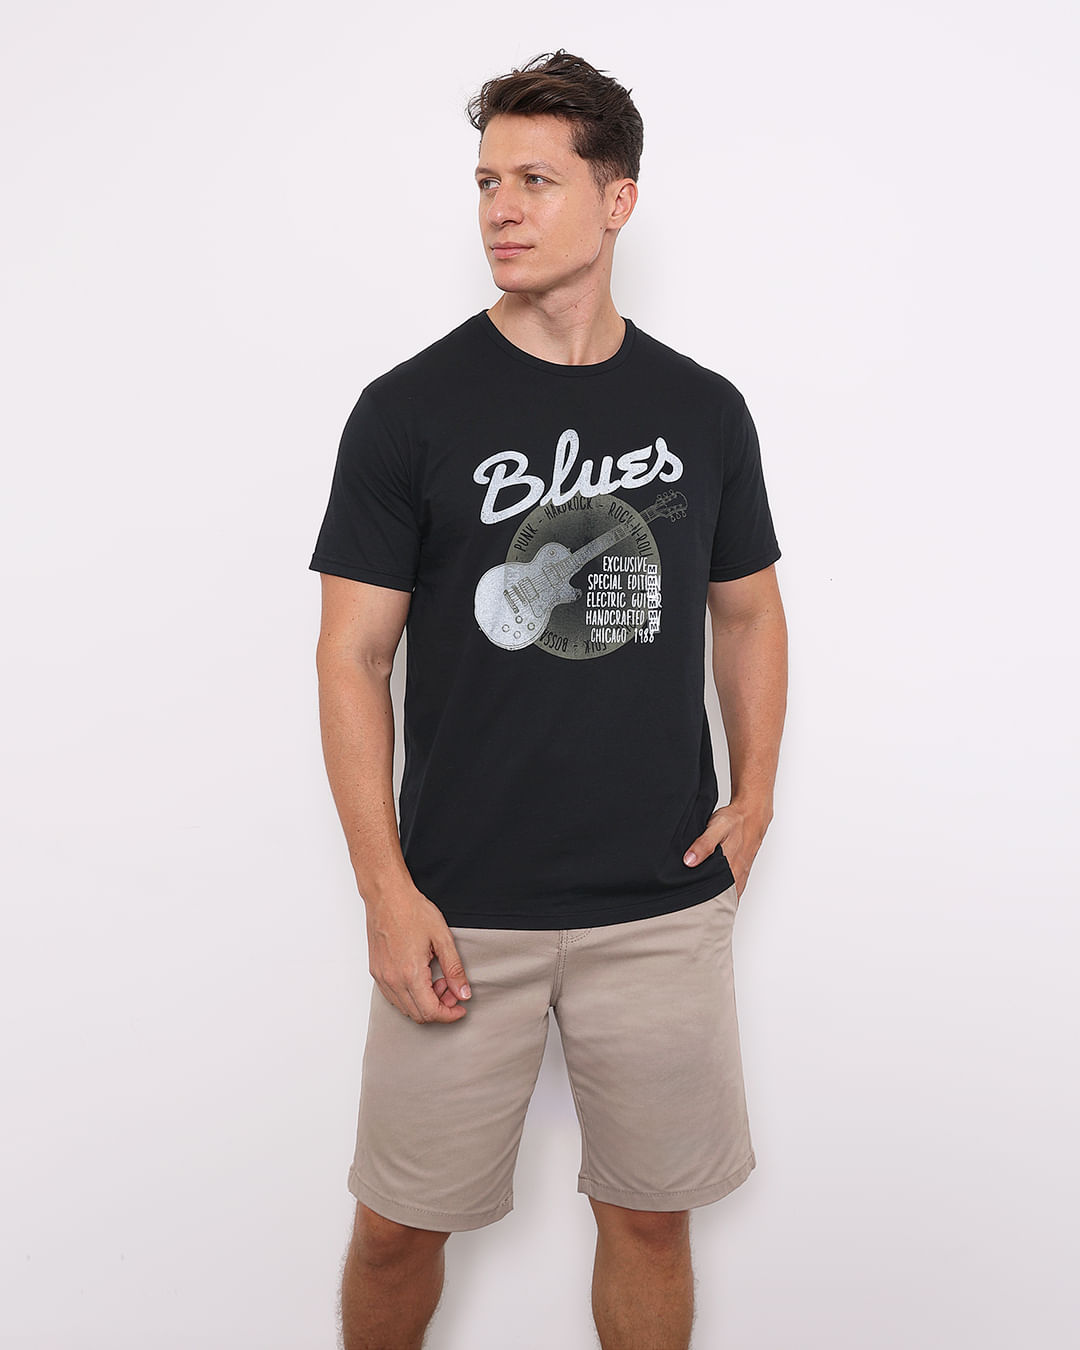 Camiseta-128-Blues-Preto-Pgg---Preto